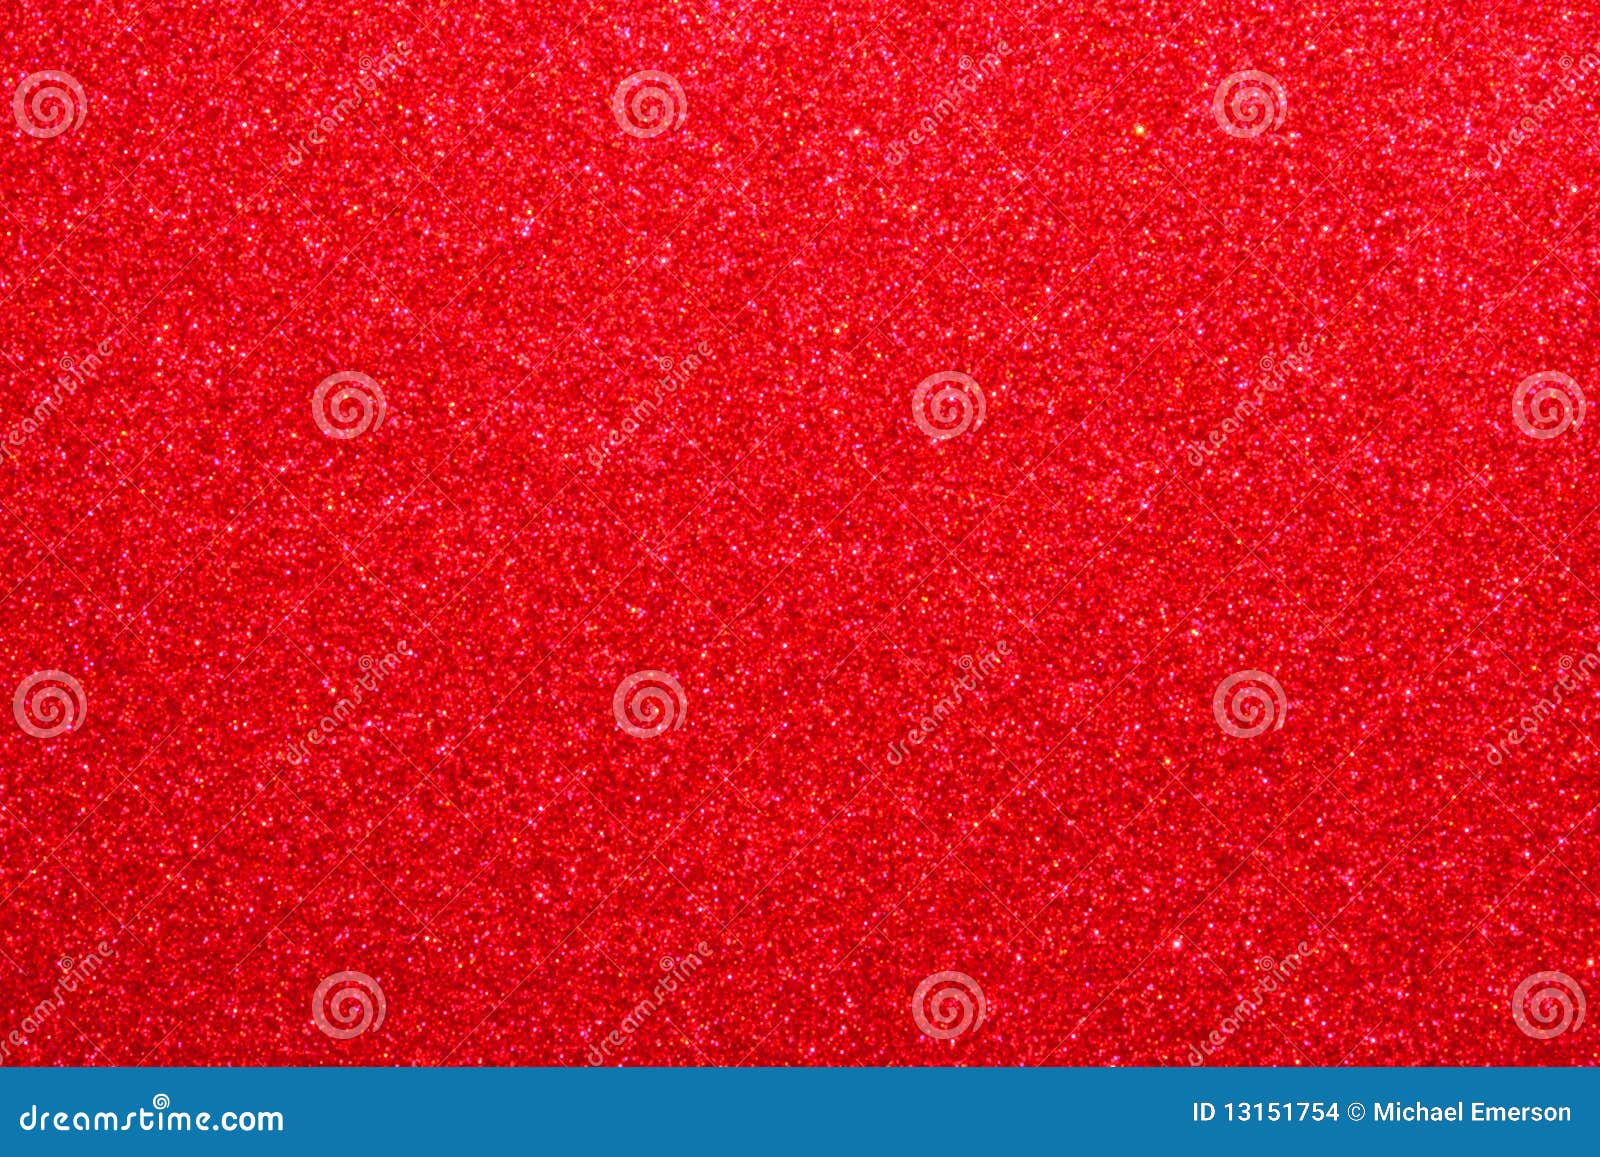 red metallic paint